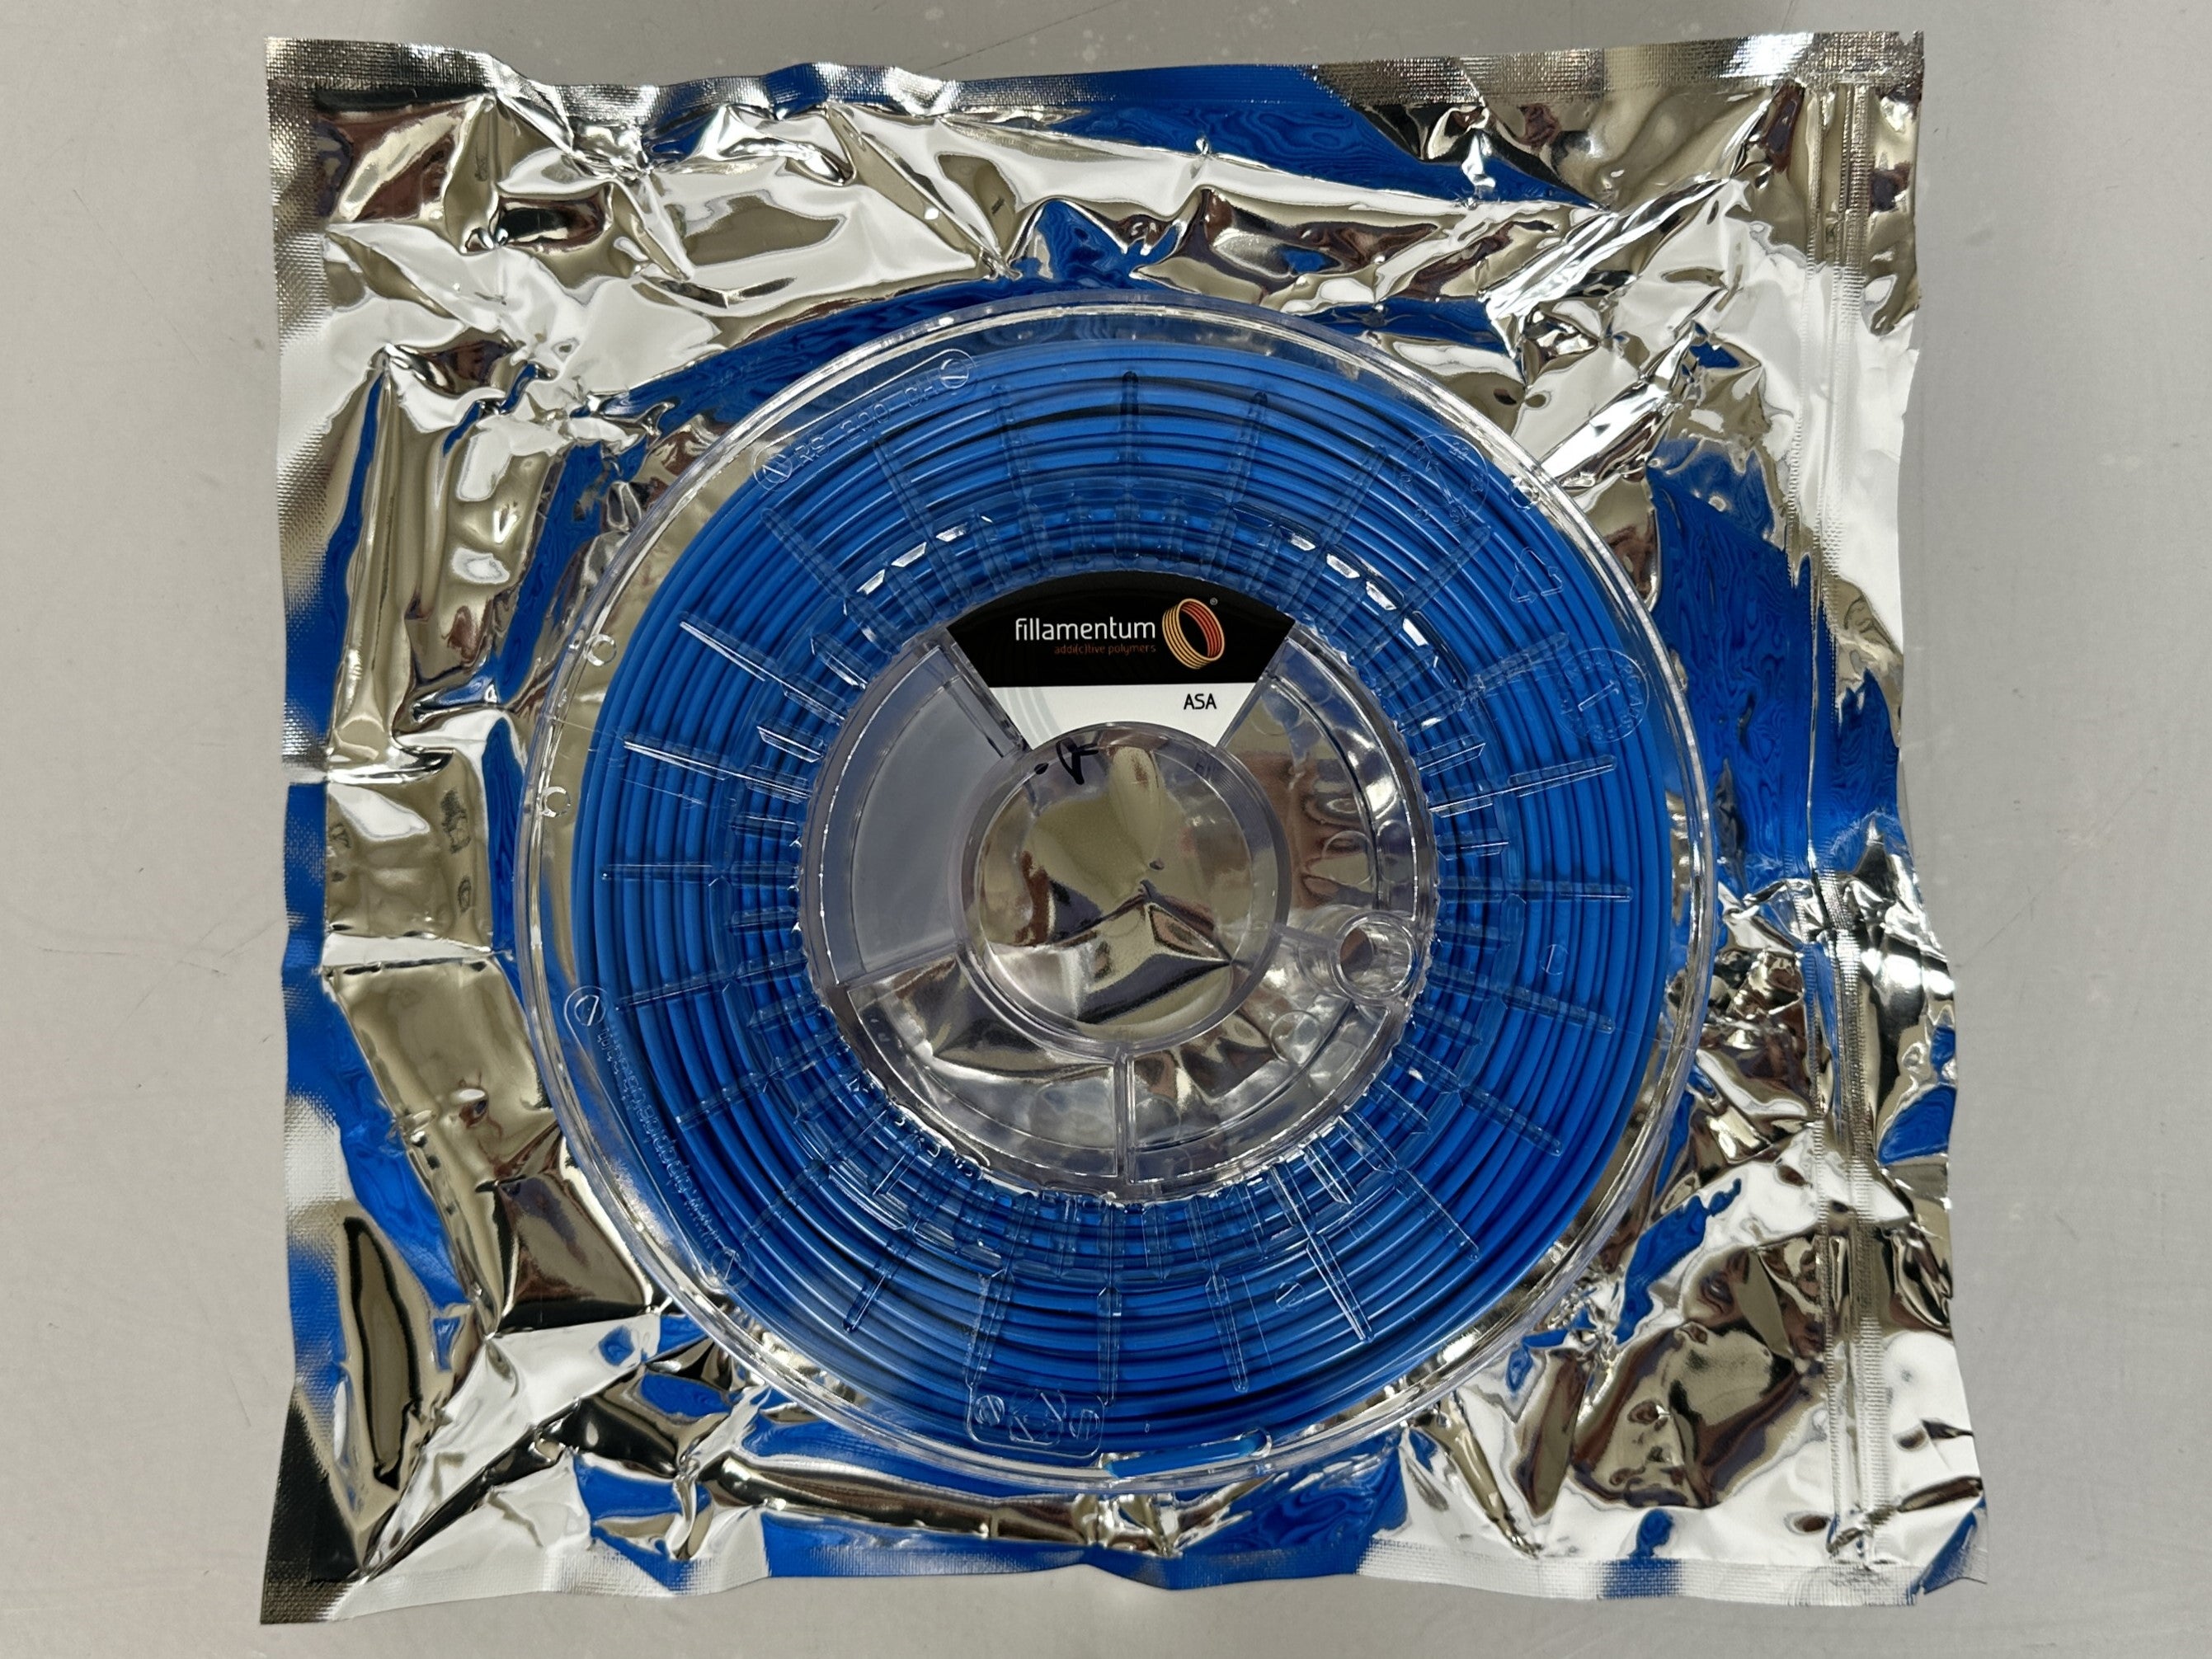 Fillamentum ASA Extrafill 2.85mm Sky Blue Filament Spool *New, Unsealed*